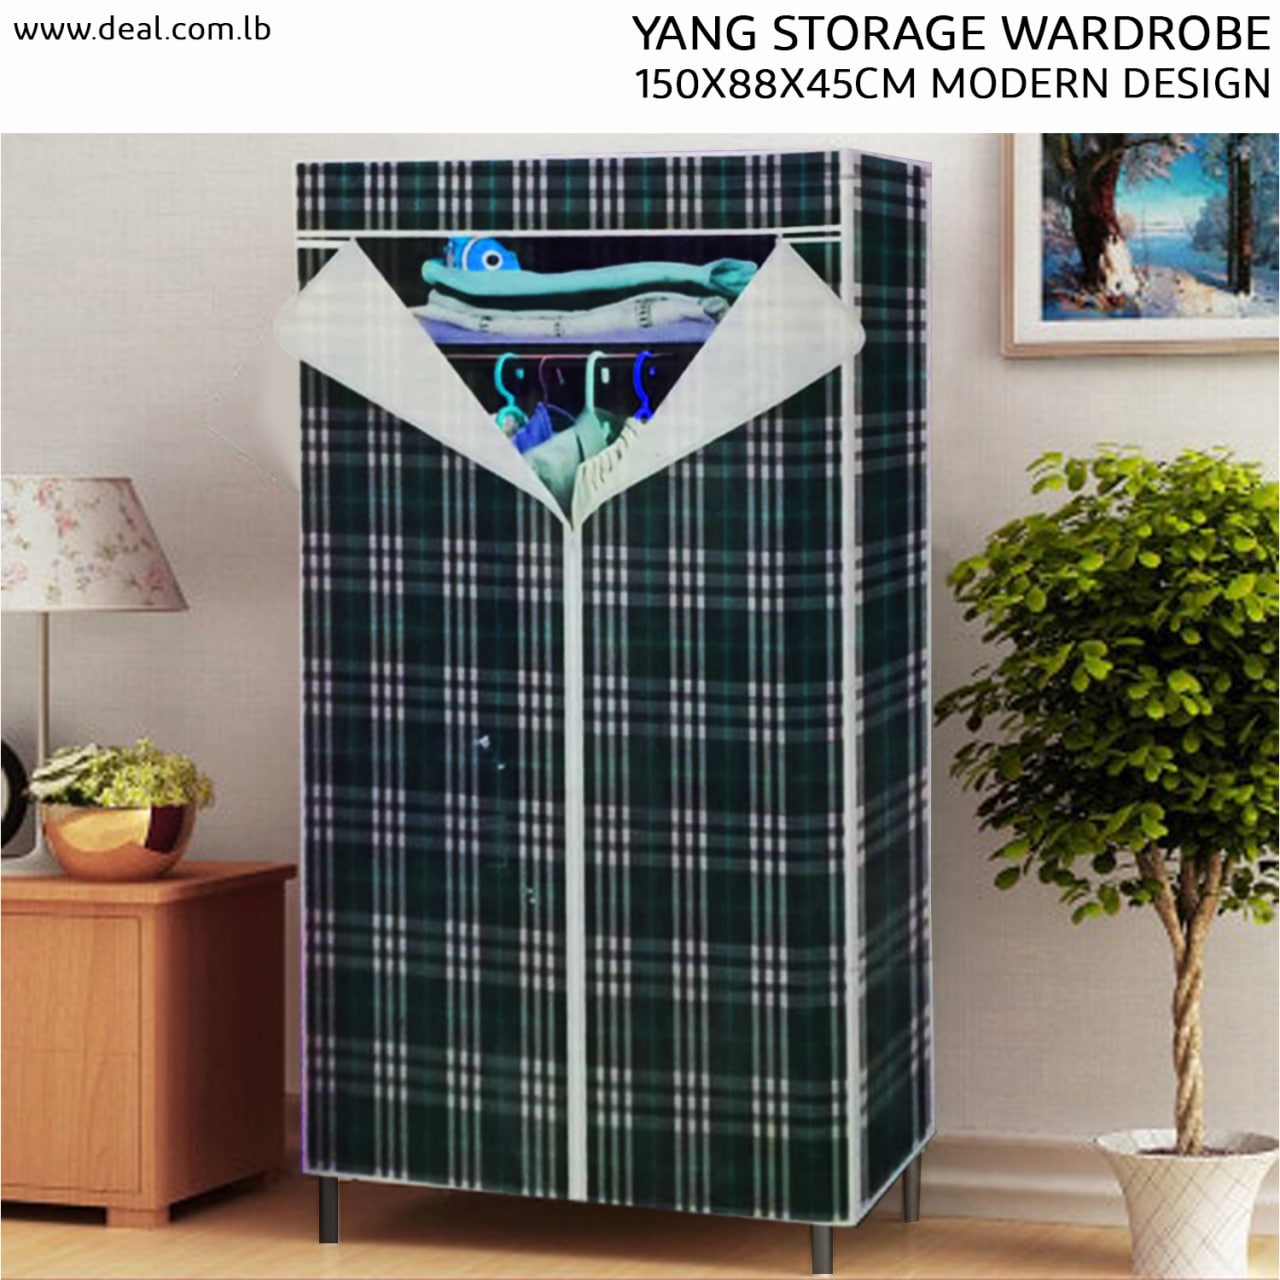 Yang Storage Wardrobe | Modern Design | 150x88x45CM